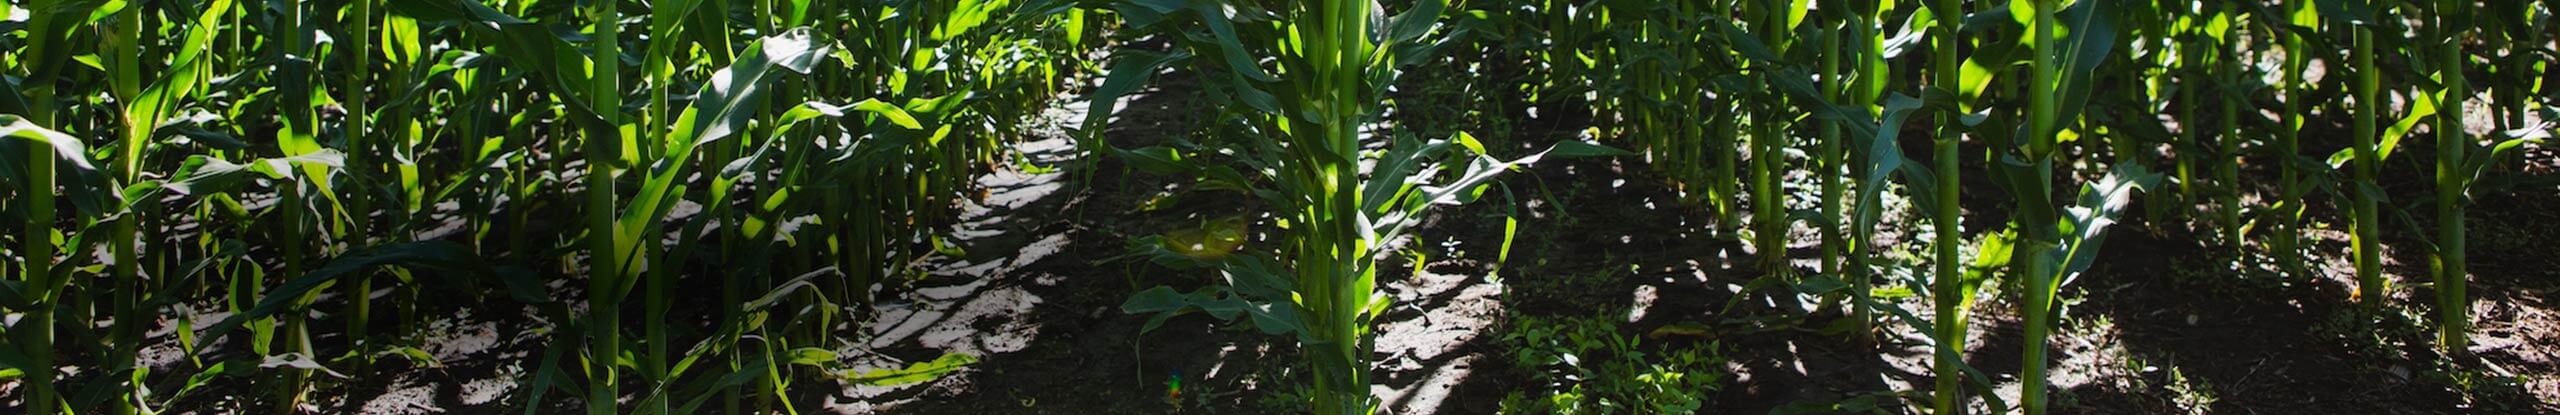 The Manitoba Corn Initiative: Optimal corn row spacing